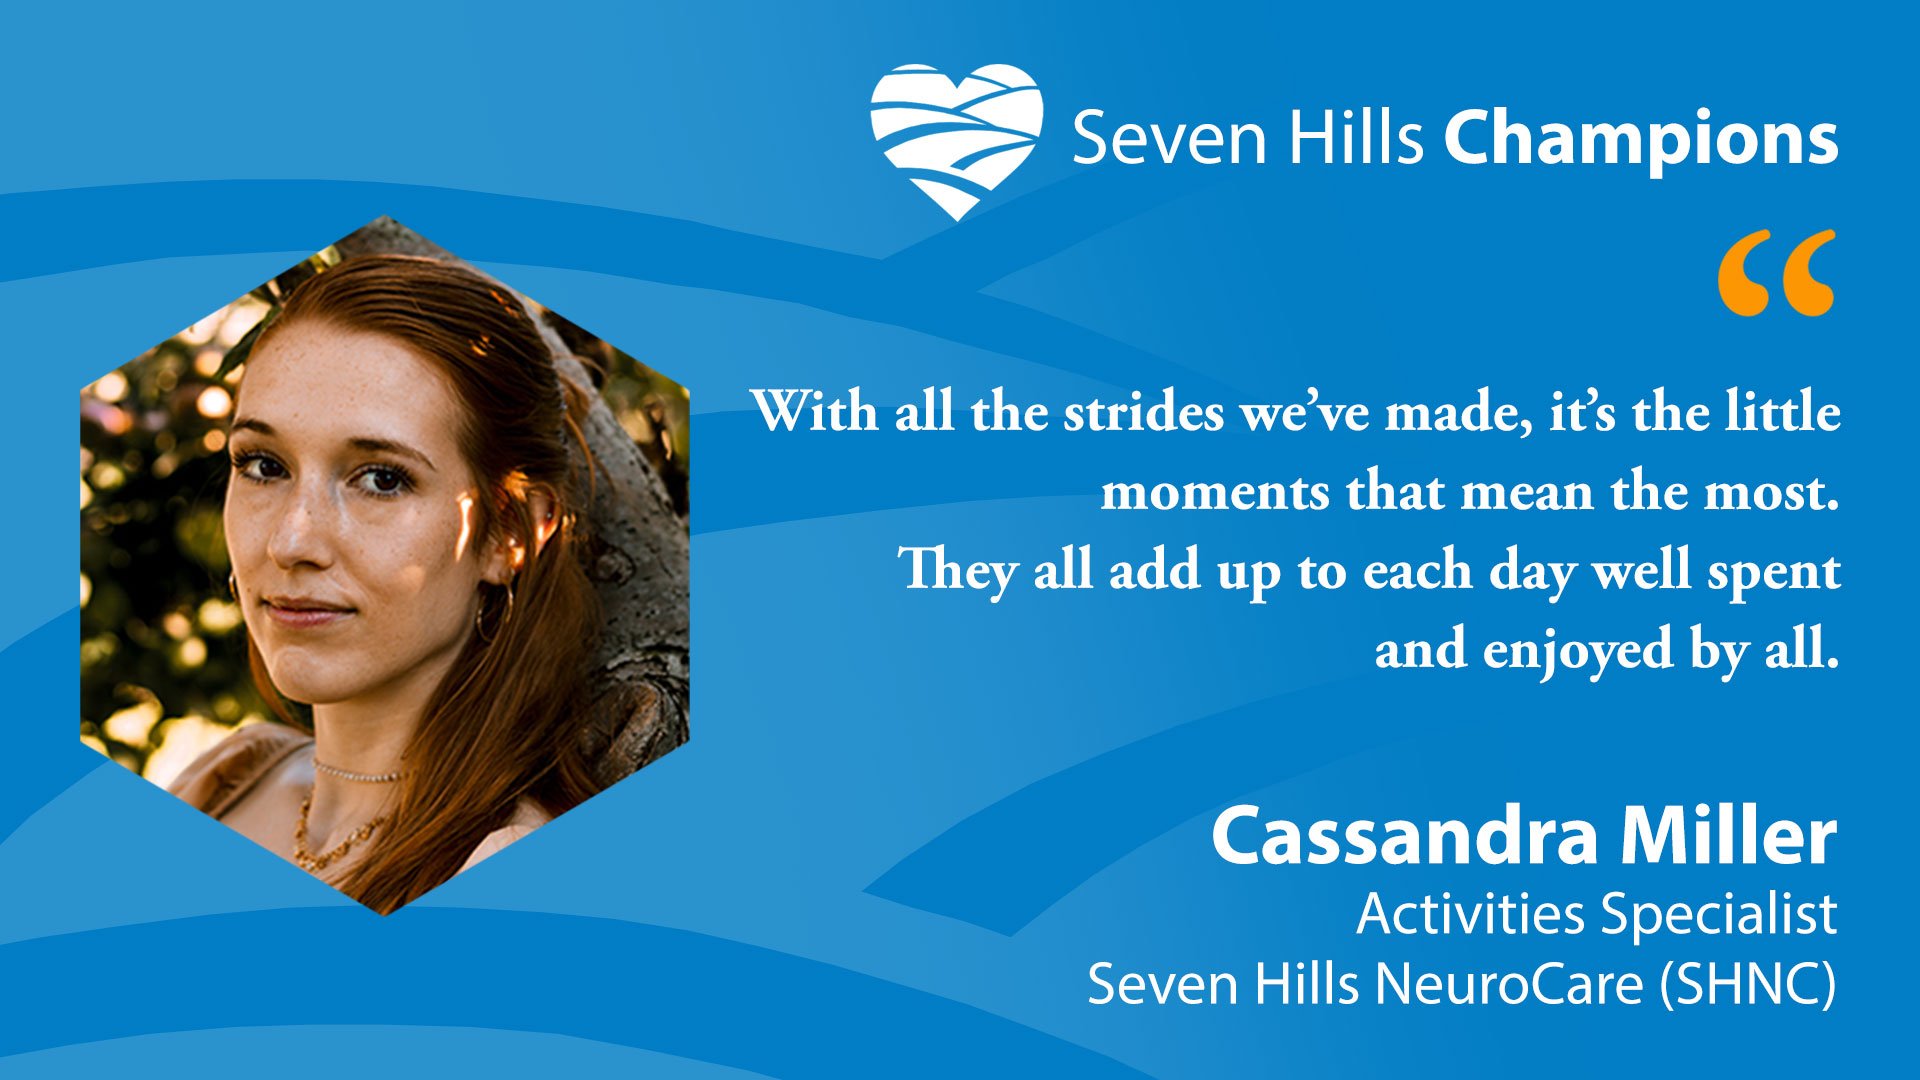 Introducing this week’s Seven Hills Champion: Cassandra Miller